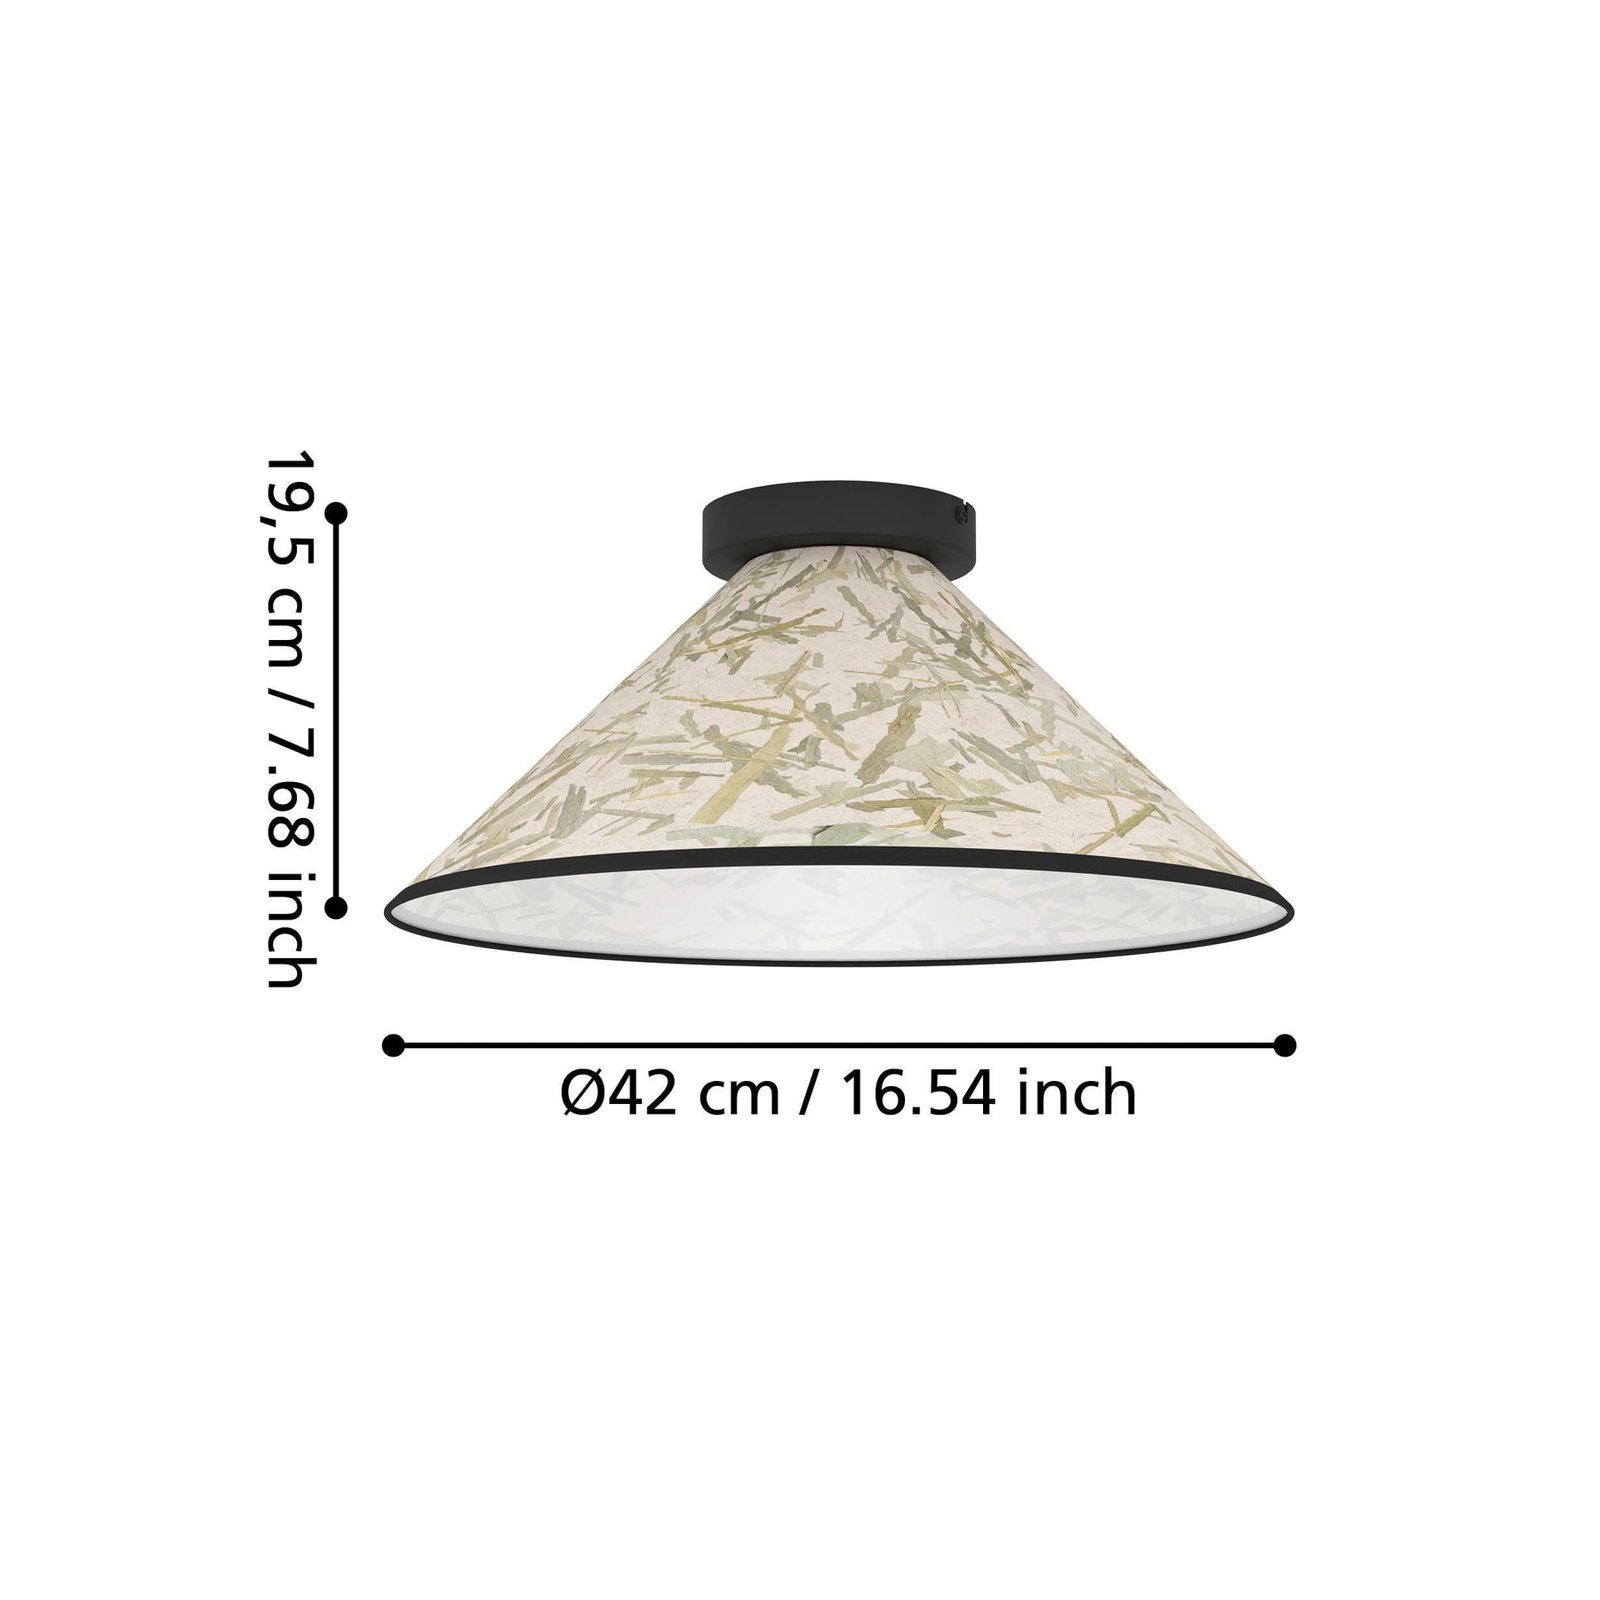 Oxpark plafondlamp, Ø 42 cm, groen/wit/zwart, stof